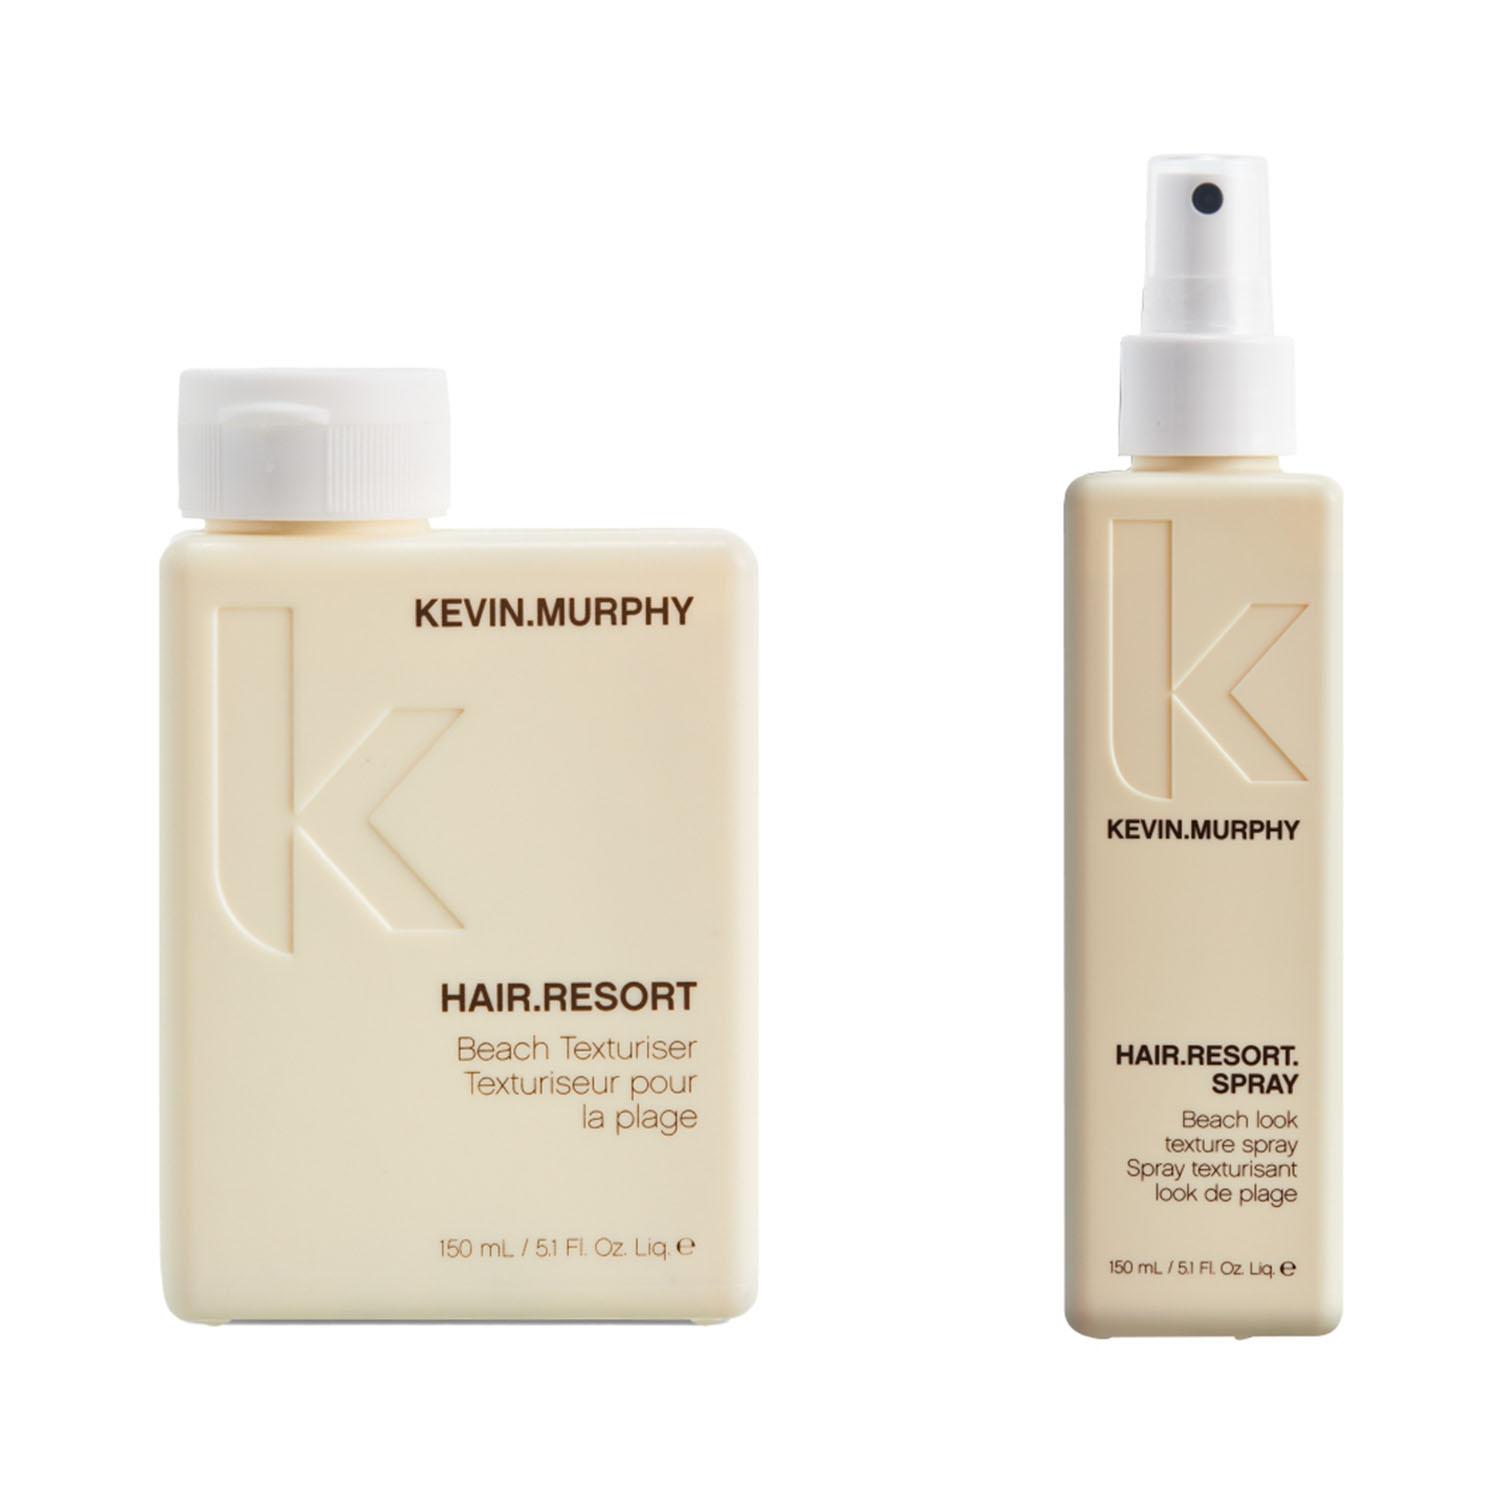 Kevin Murphy Hair Resort and Hair Resort Spray  Beachy Textured Style Duo